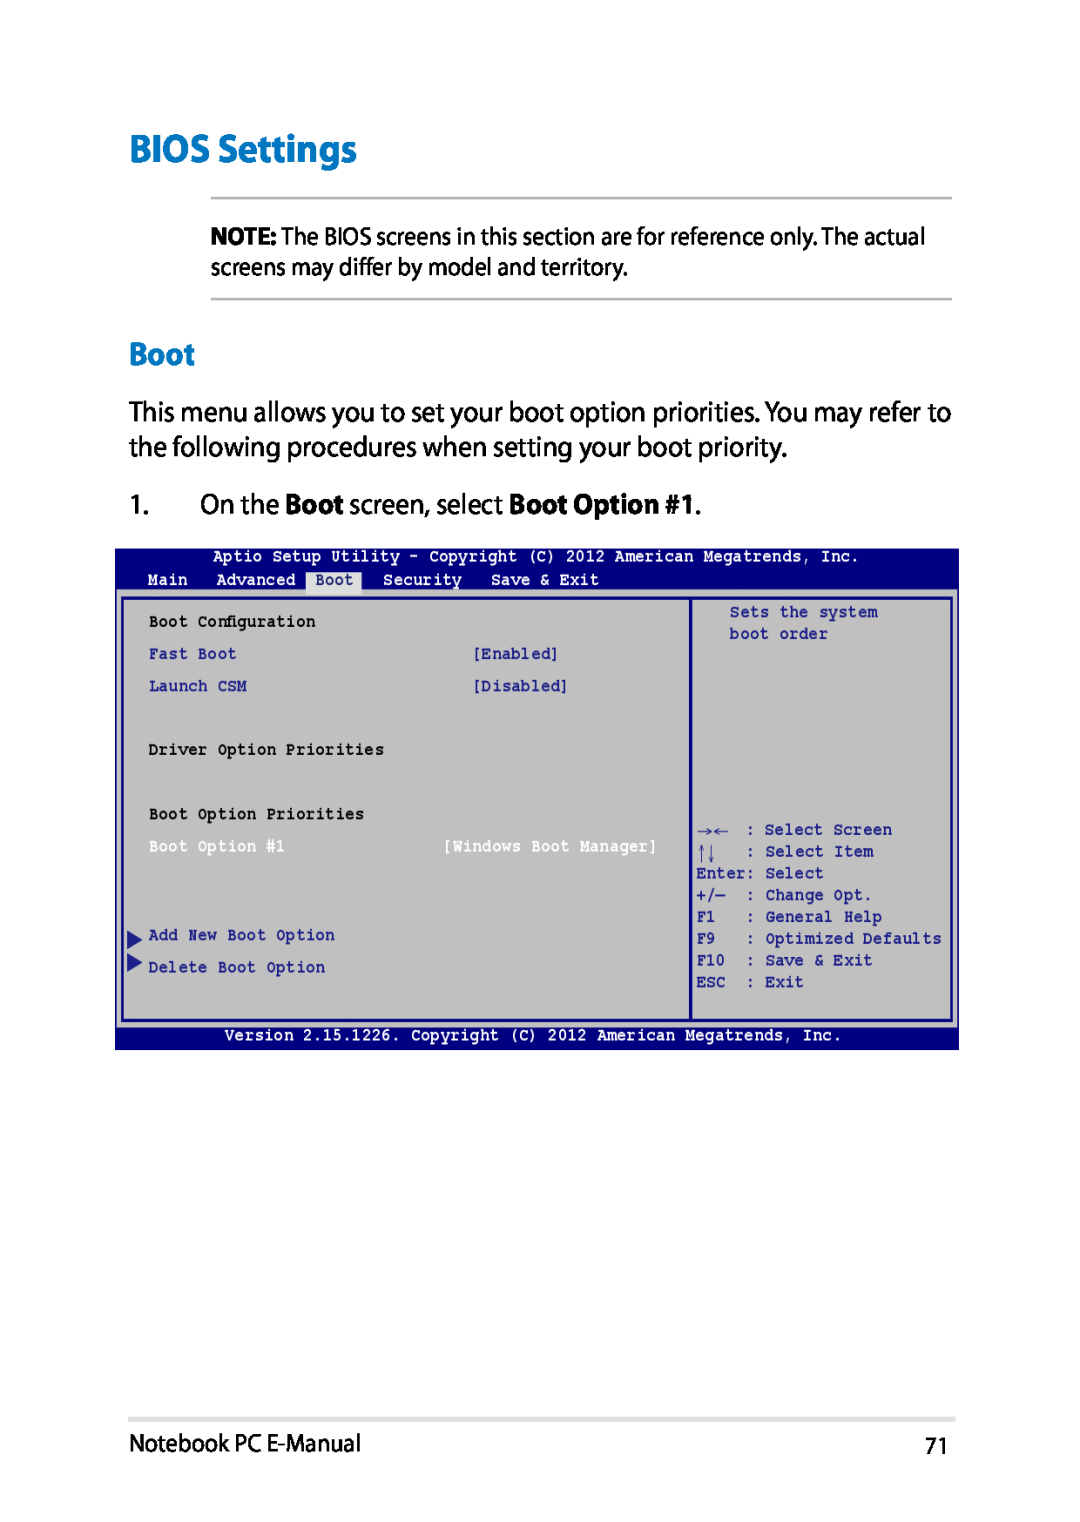 Asus E8438 manual BIOS Settings, Notebook PC E-Manual, Boot Option #1, Windows Boot Manager 